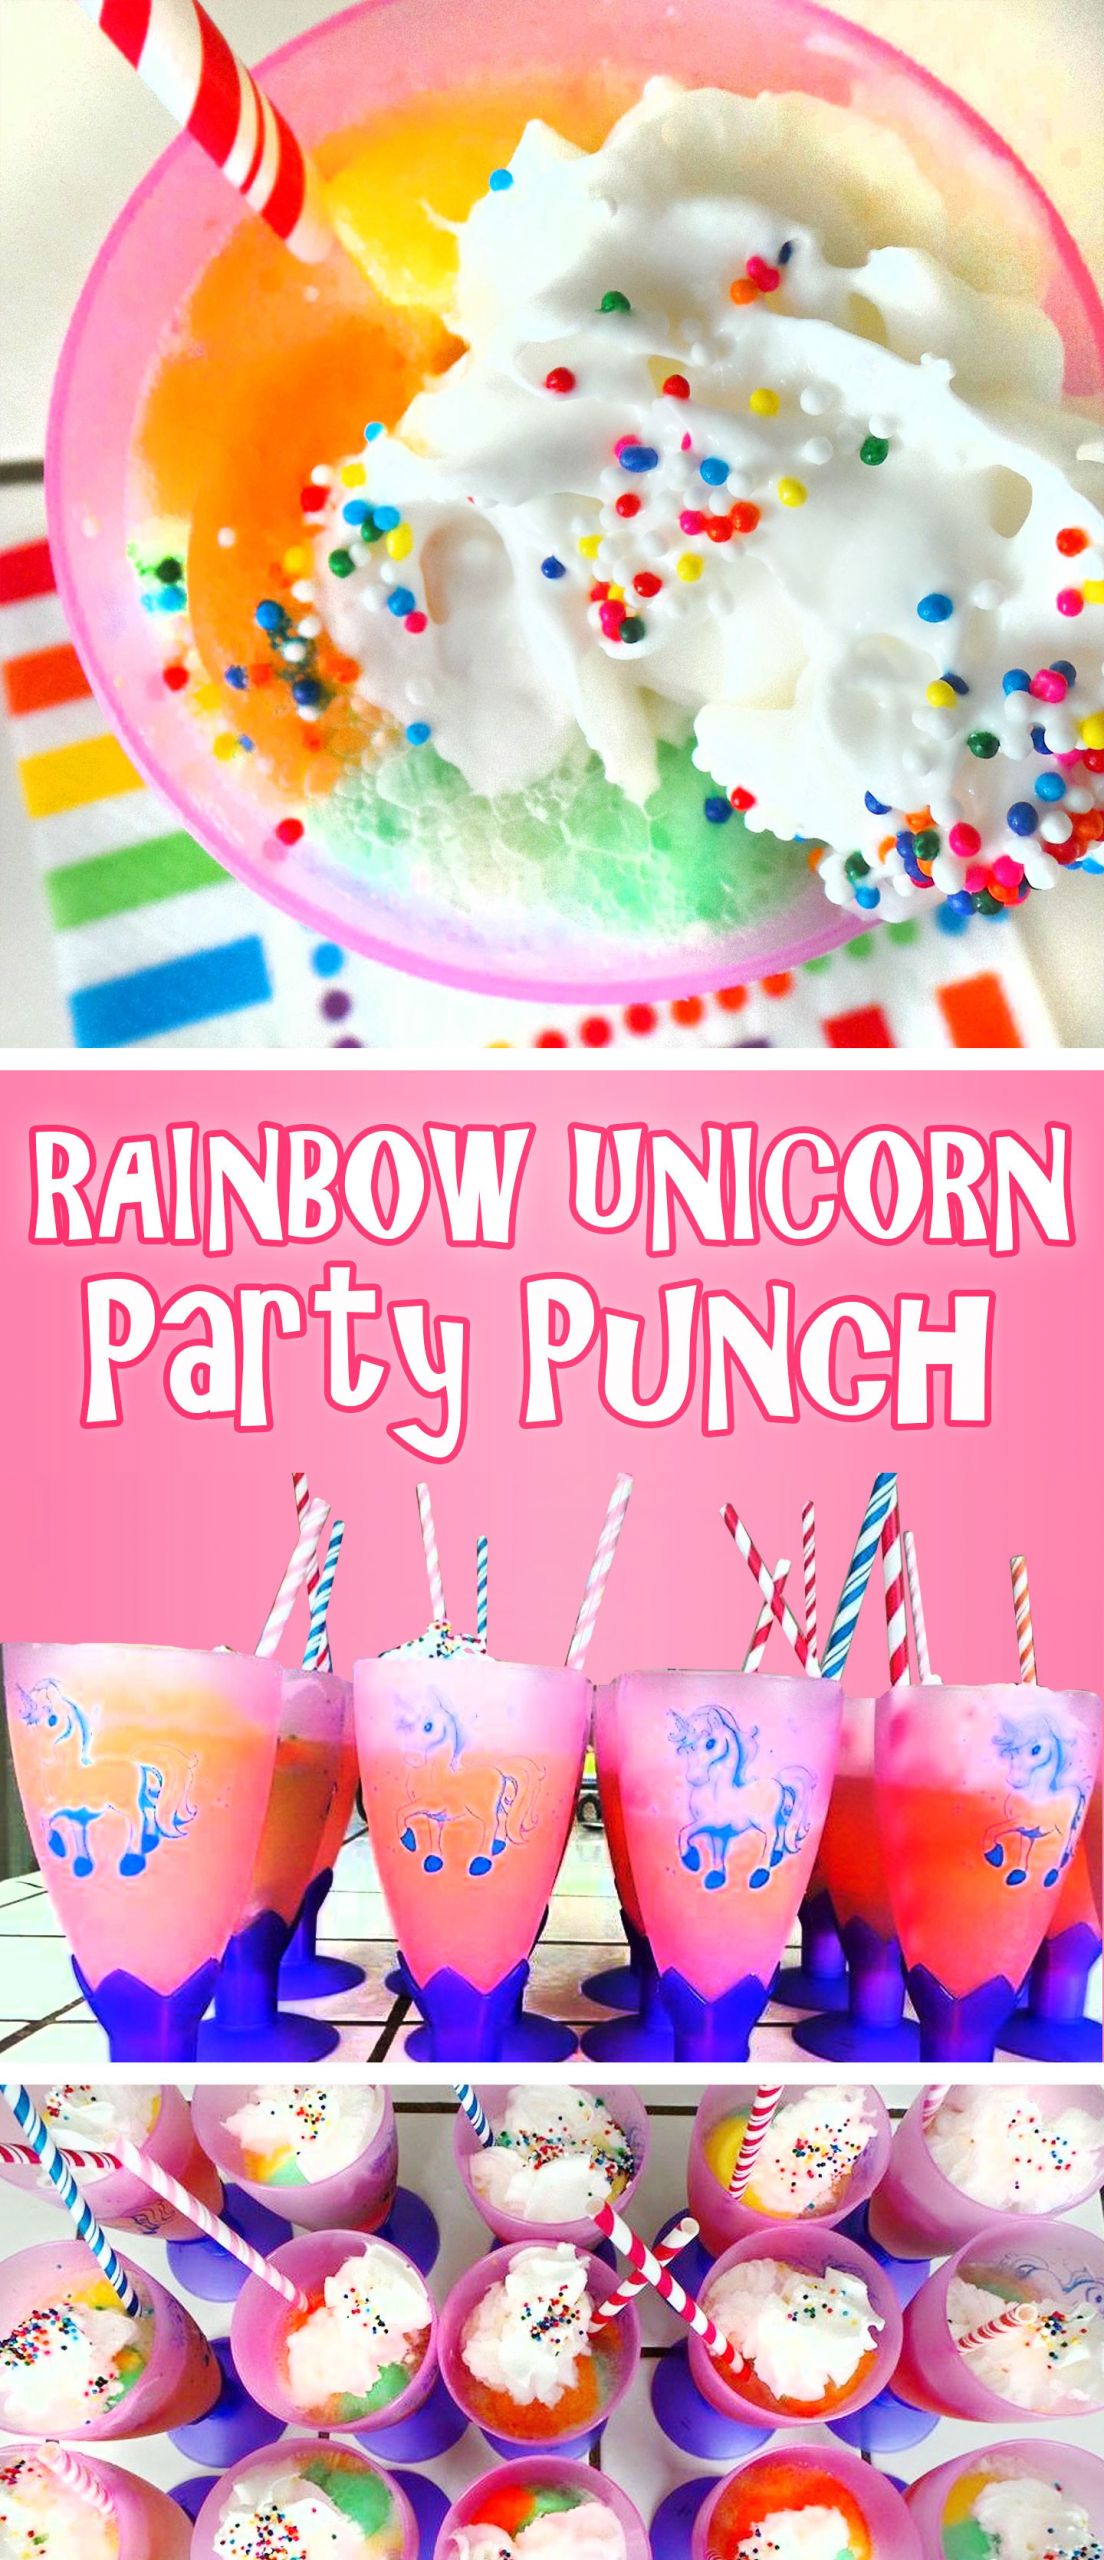 Unicorn Food Party Ideas
 Rainbow Unicorn Party Punch